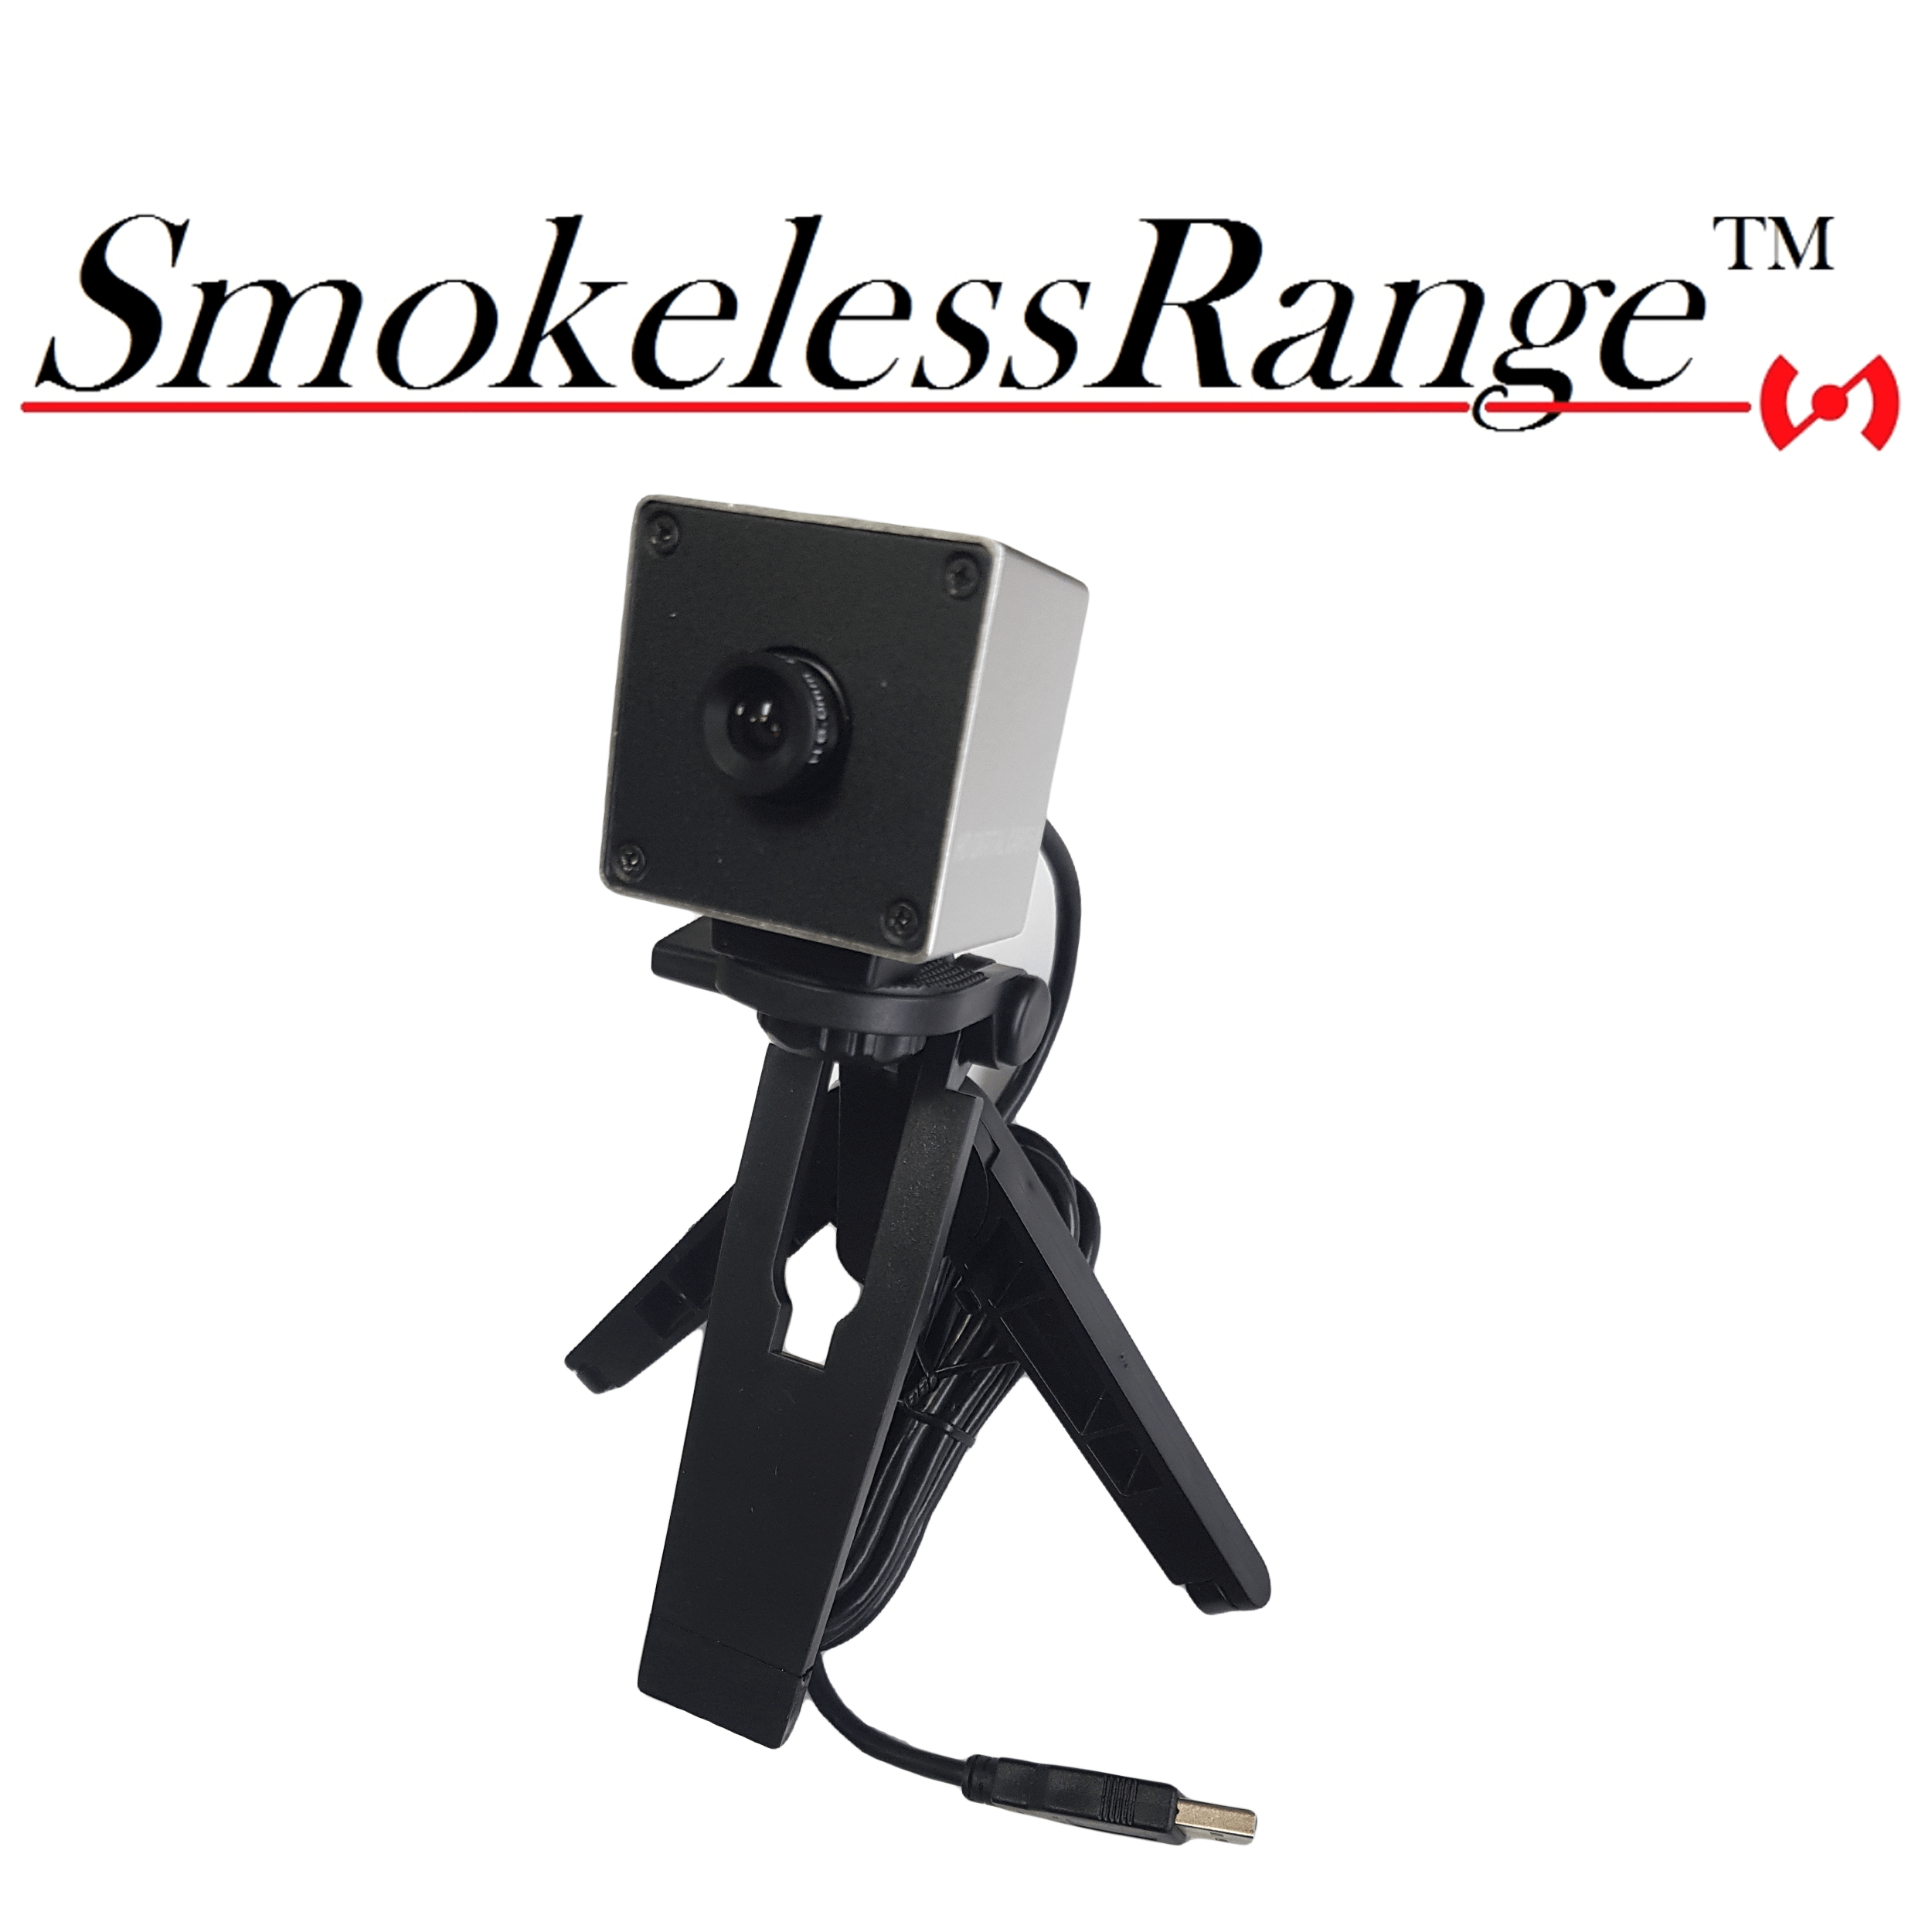 Smokeless Range® 2.0 - Home Simulator - SR001